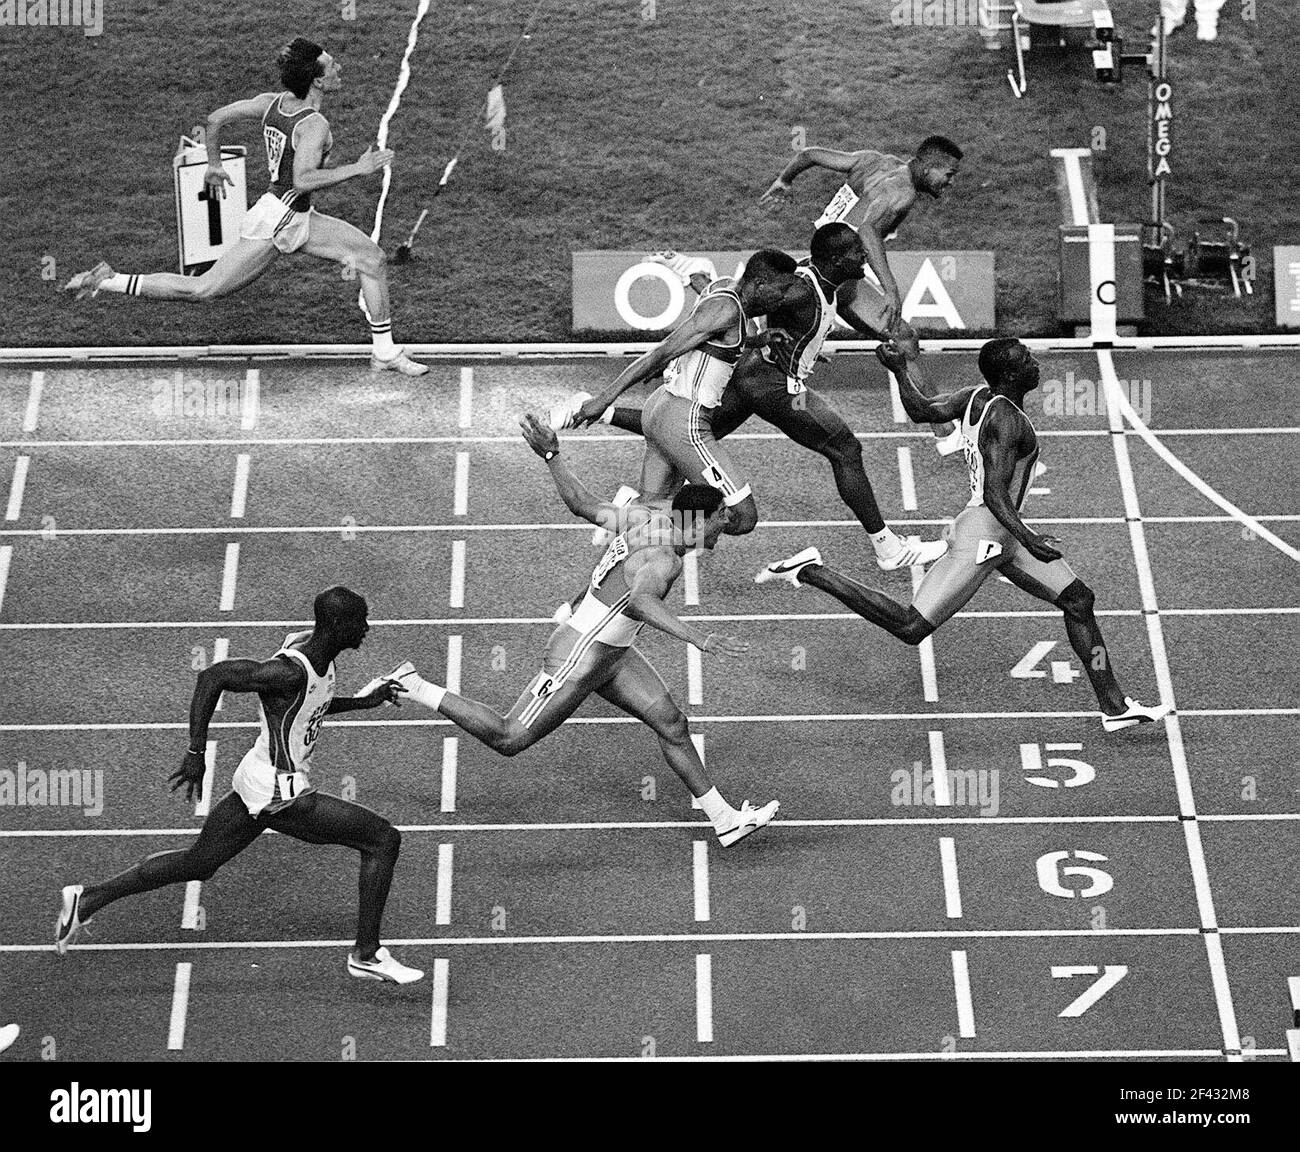 LINFORD CHRISTIE WINS THE 100m FINAL IN BARCELONA 1992 PICTURE DAVID ASHDOWN Stock Photo